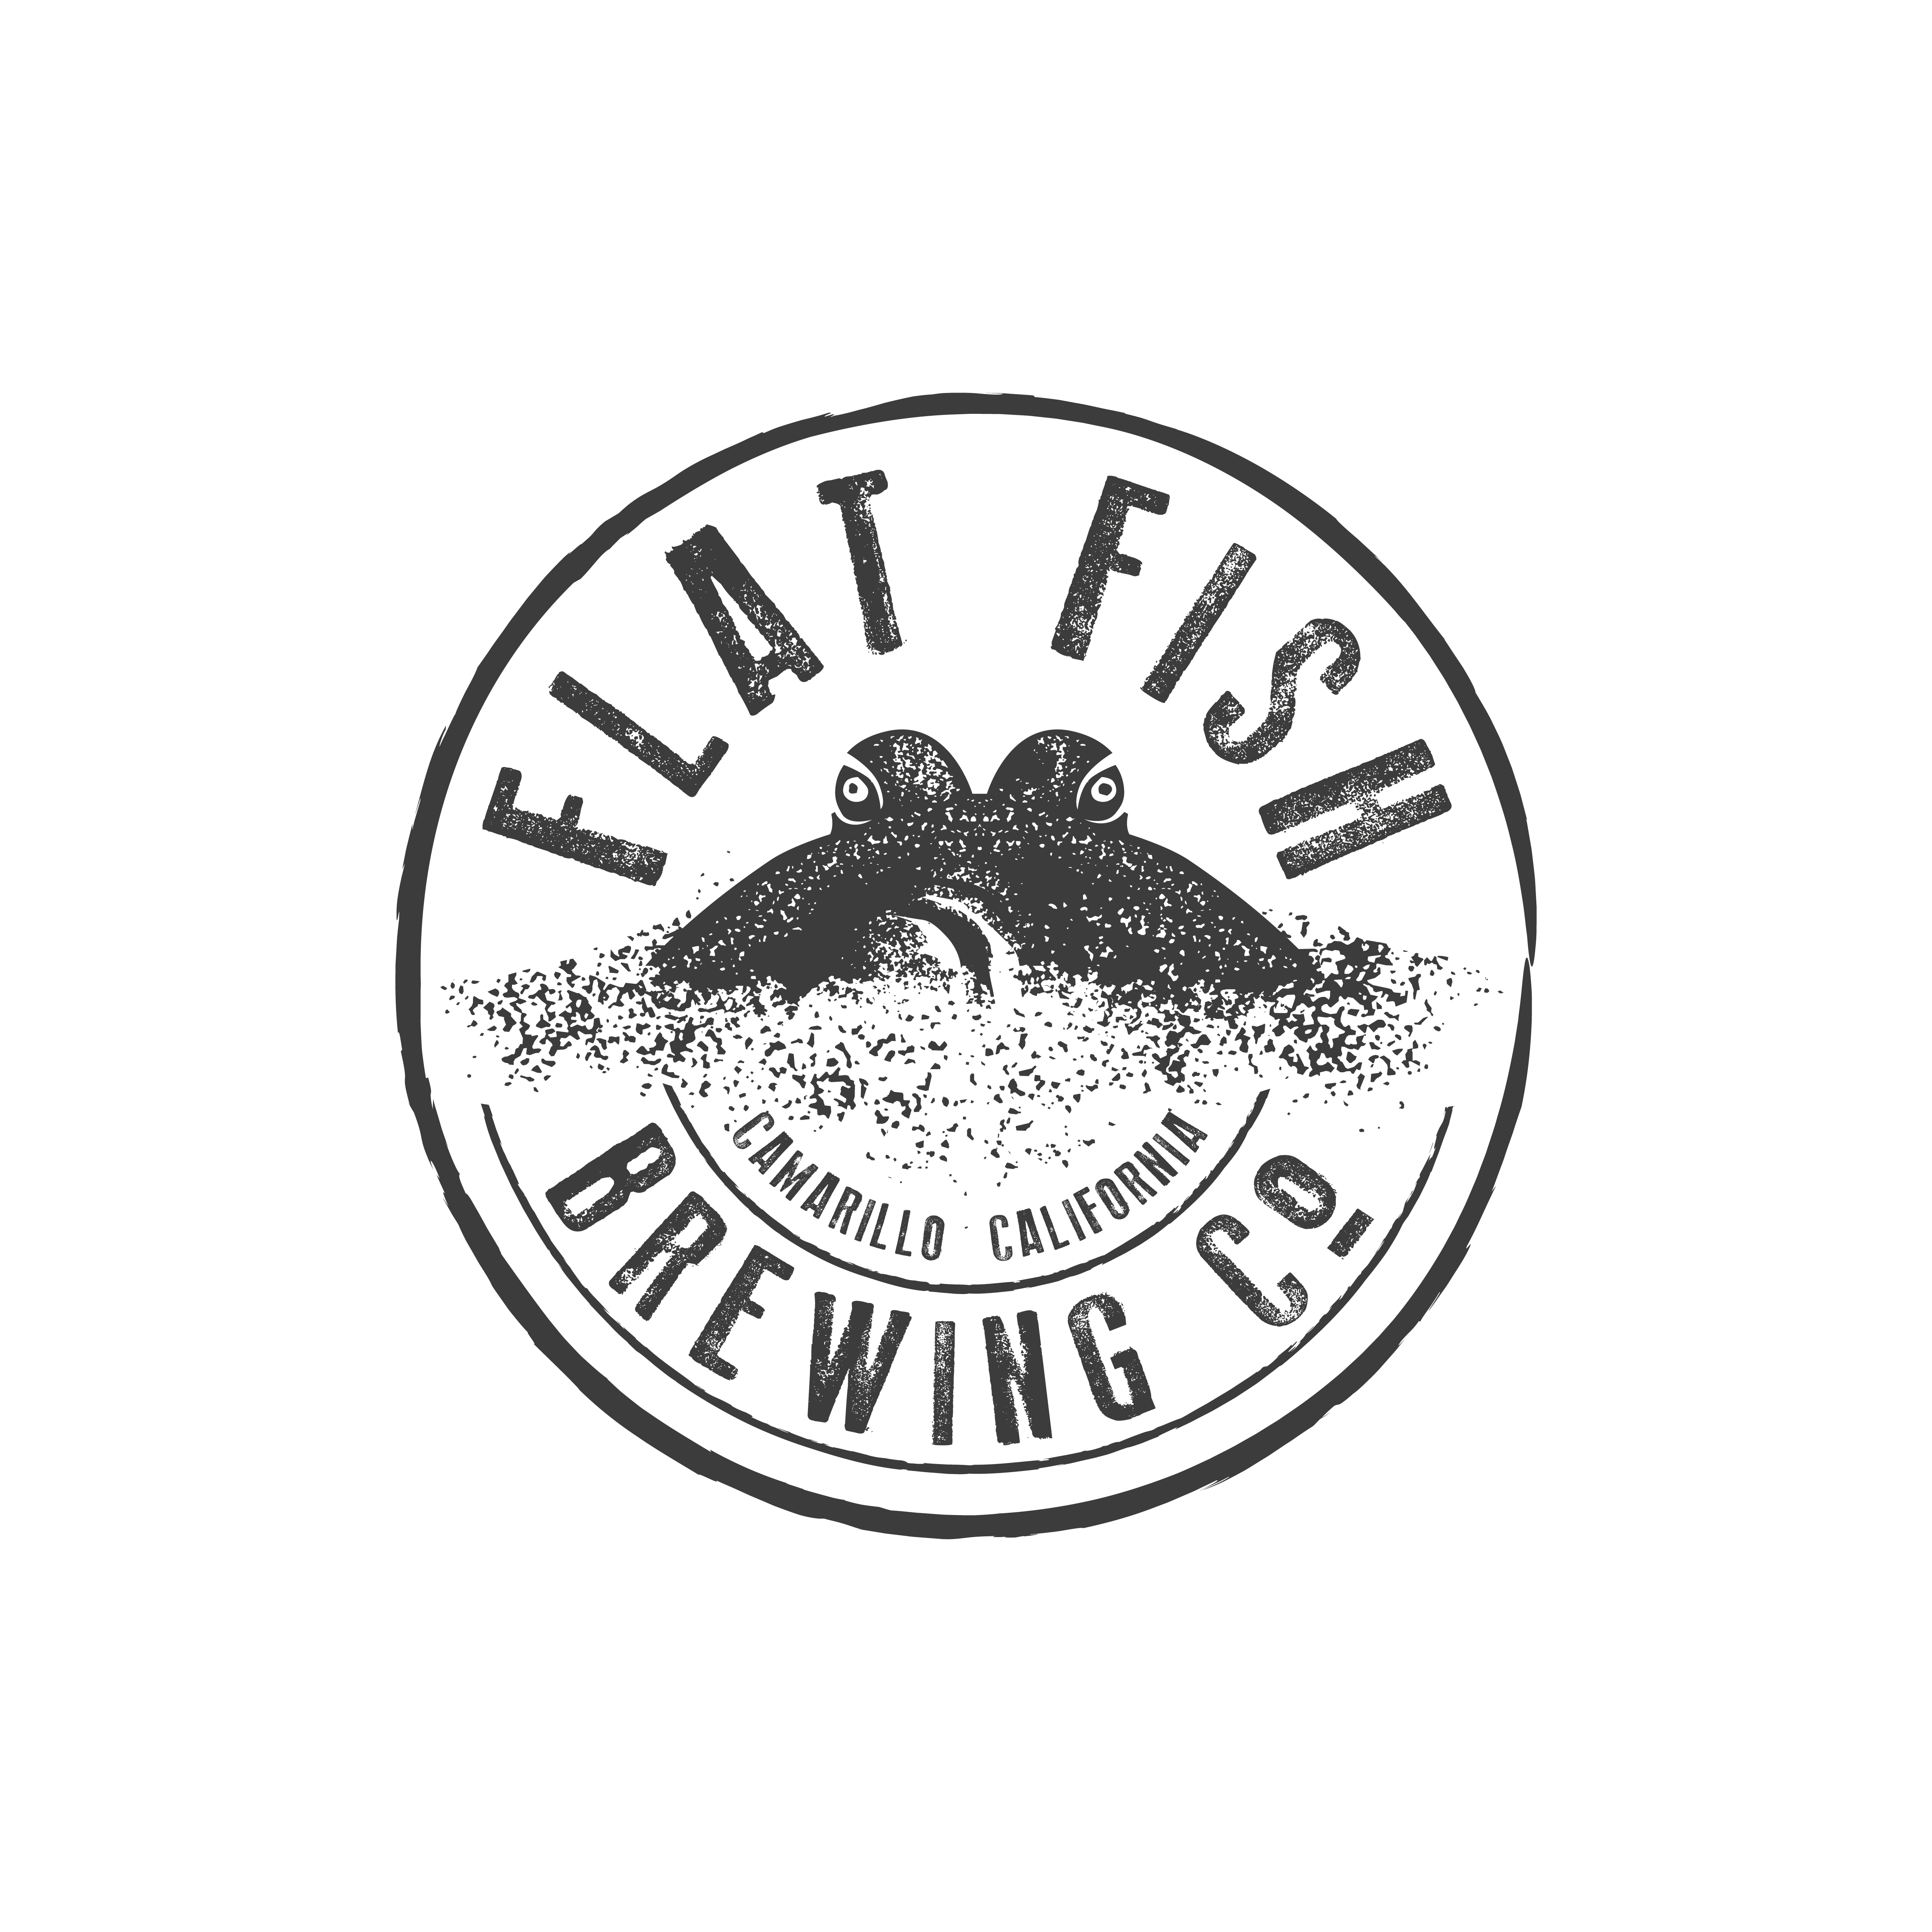 Flat Fish Brewing Company